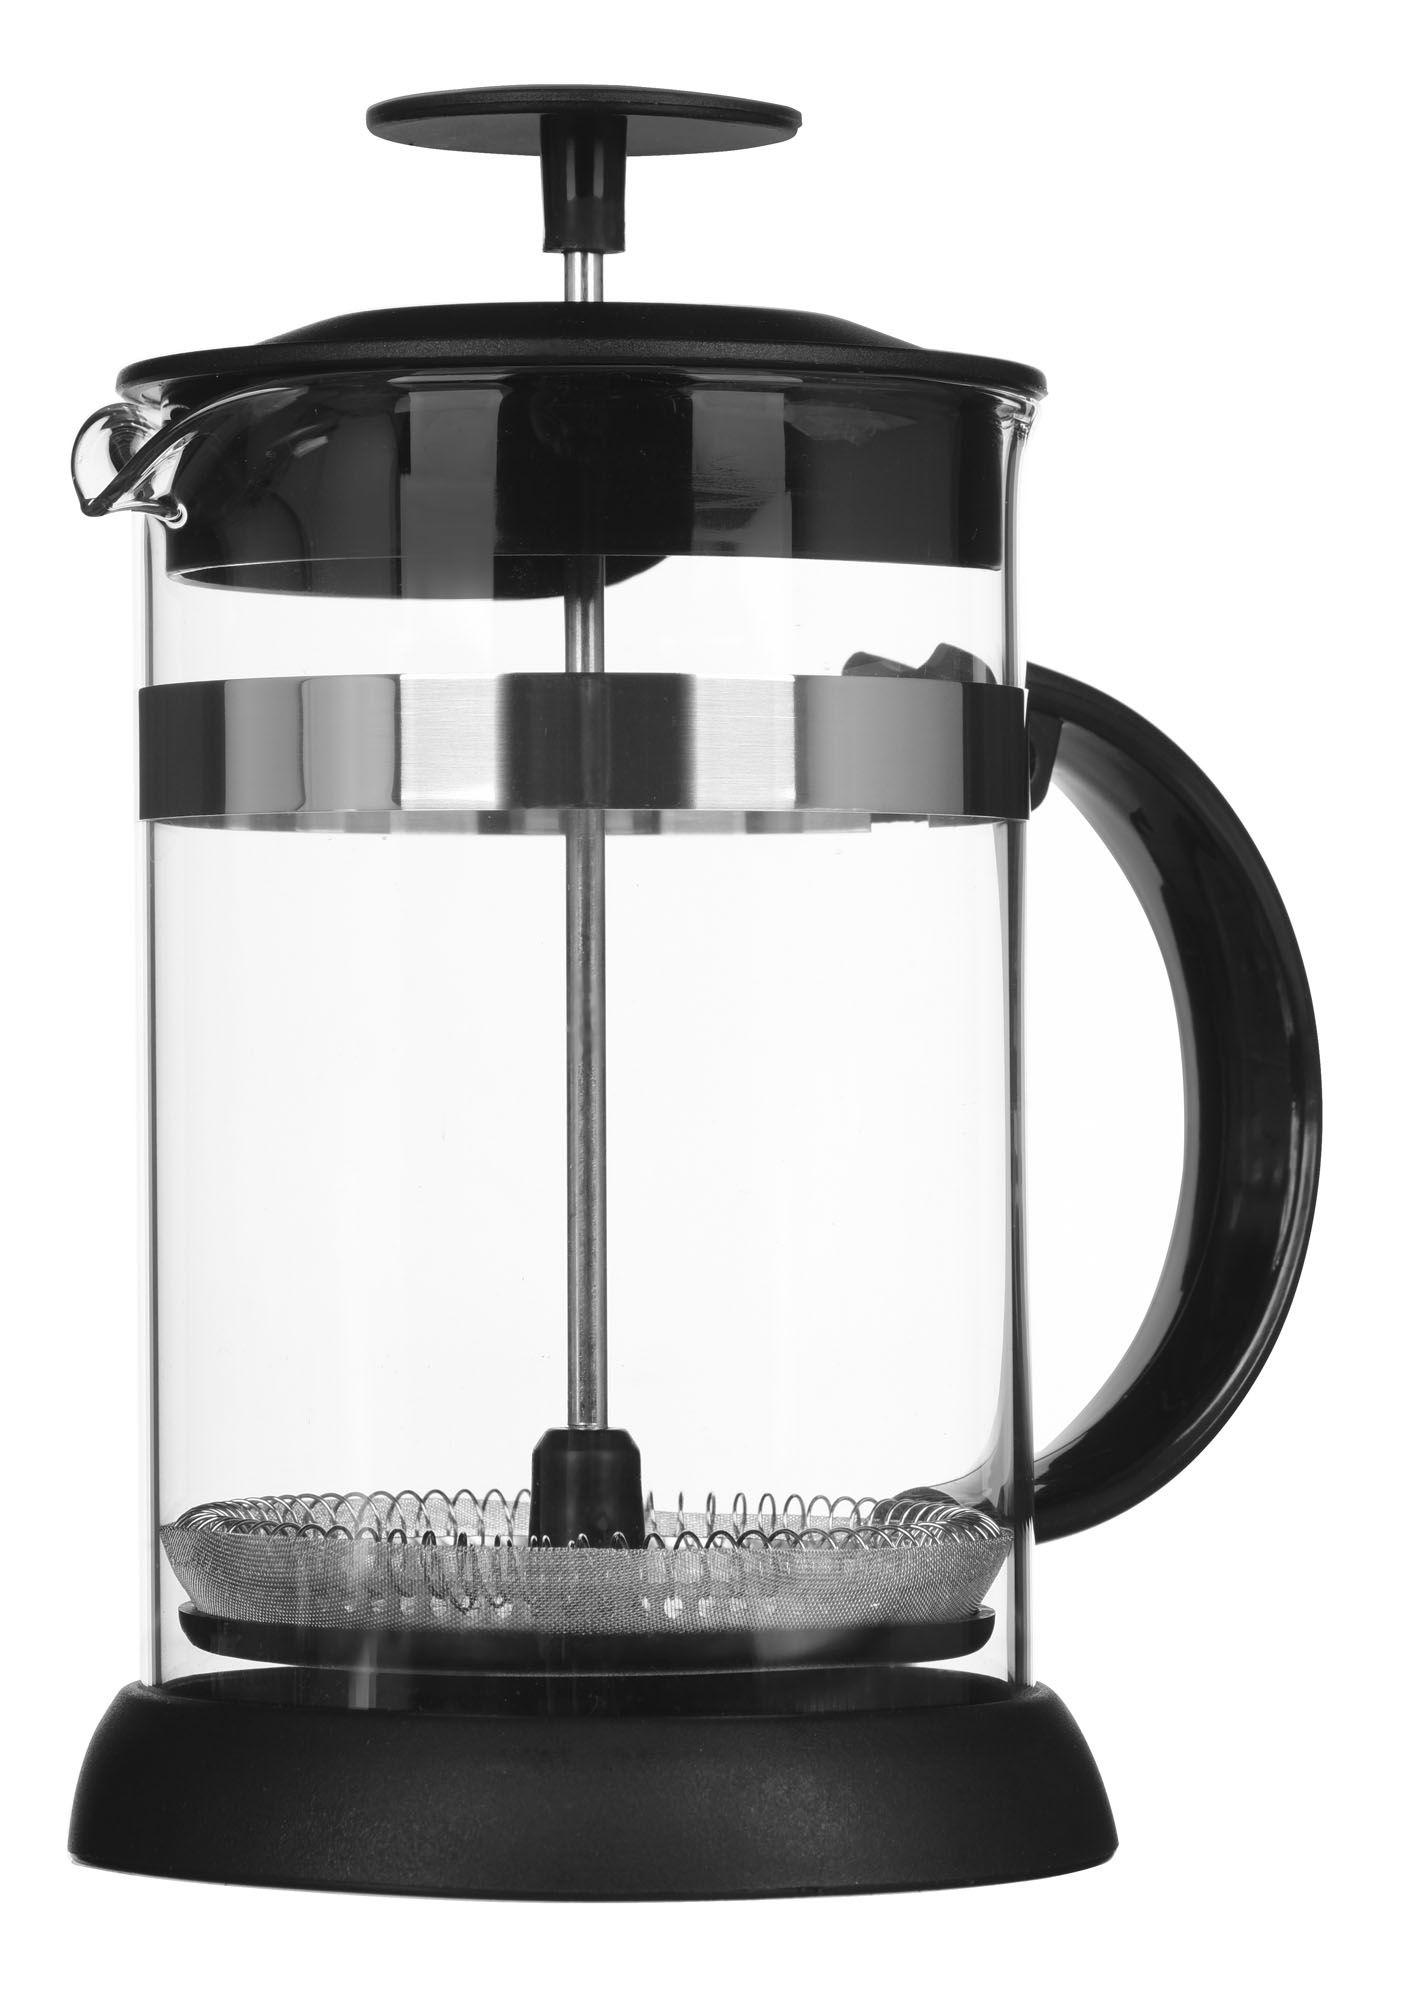 Coffee and tea maker 0.8 L, FACKELMANN 521691, black, transparent